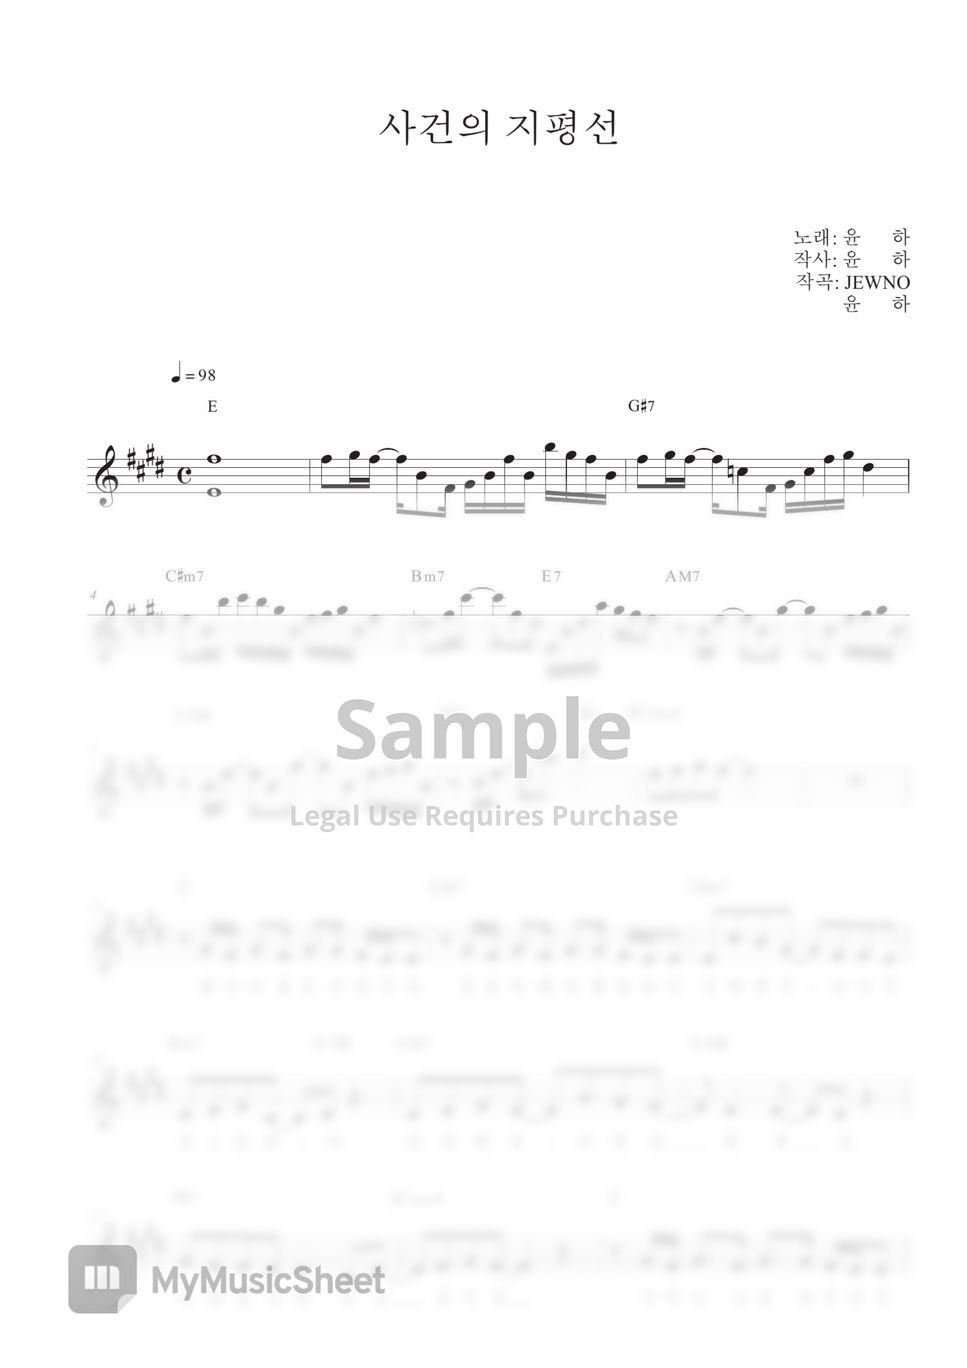 YOUNHA - Event Horizon E Major (Saxophone / Lyrics / Chords) by thesaxophonist